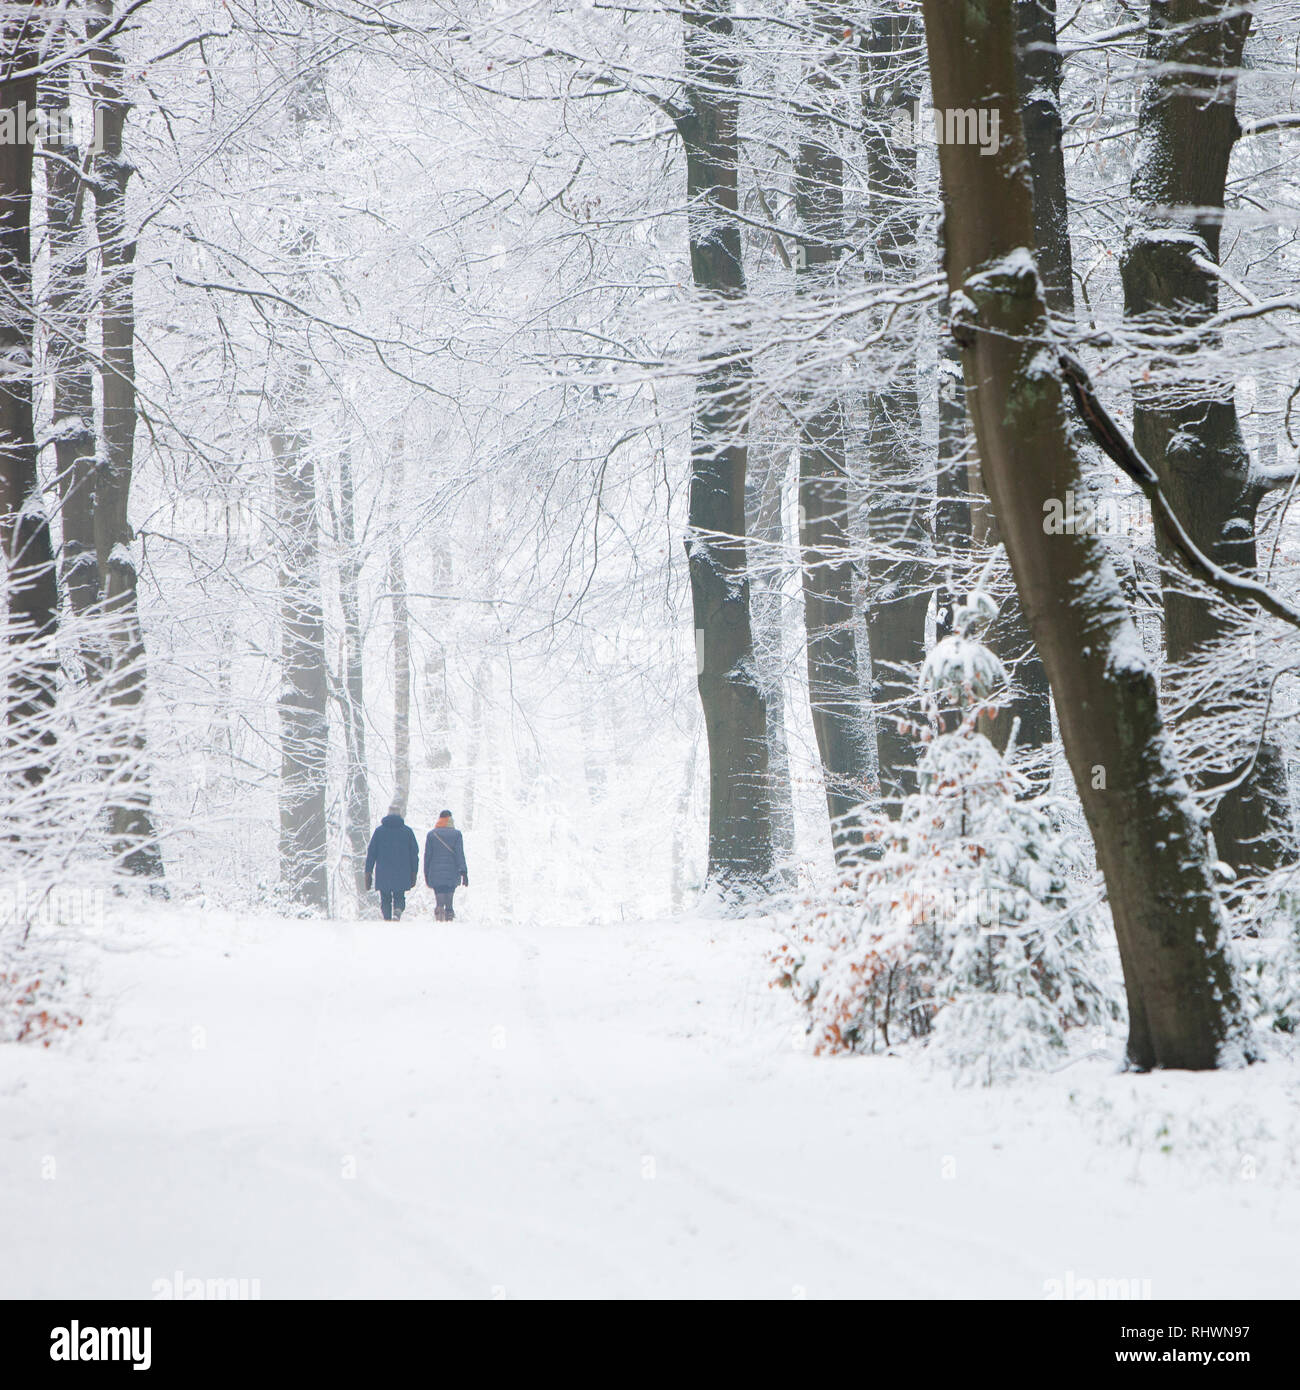 Giovane passeggiate nella neve invernale forest sulla Utrechtse Heuvelrug nei Paesi Bassi nei pressi di Austerlitz e utrecht Foto Stock